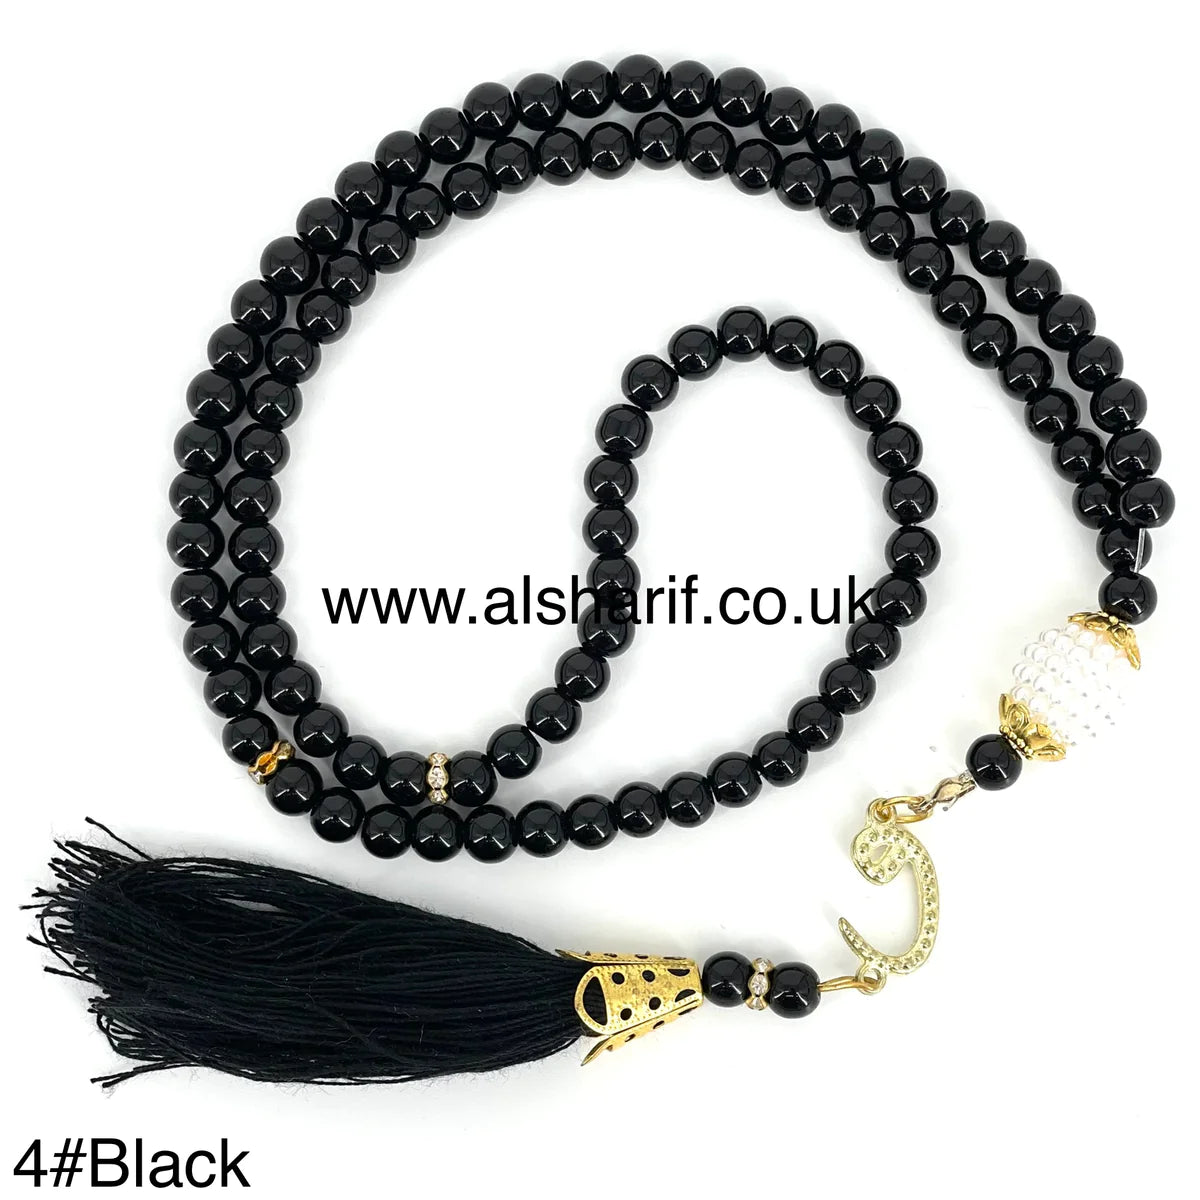 Tasbeeh 99 Beads 4#Black